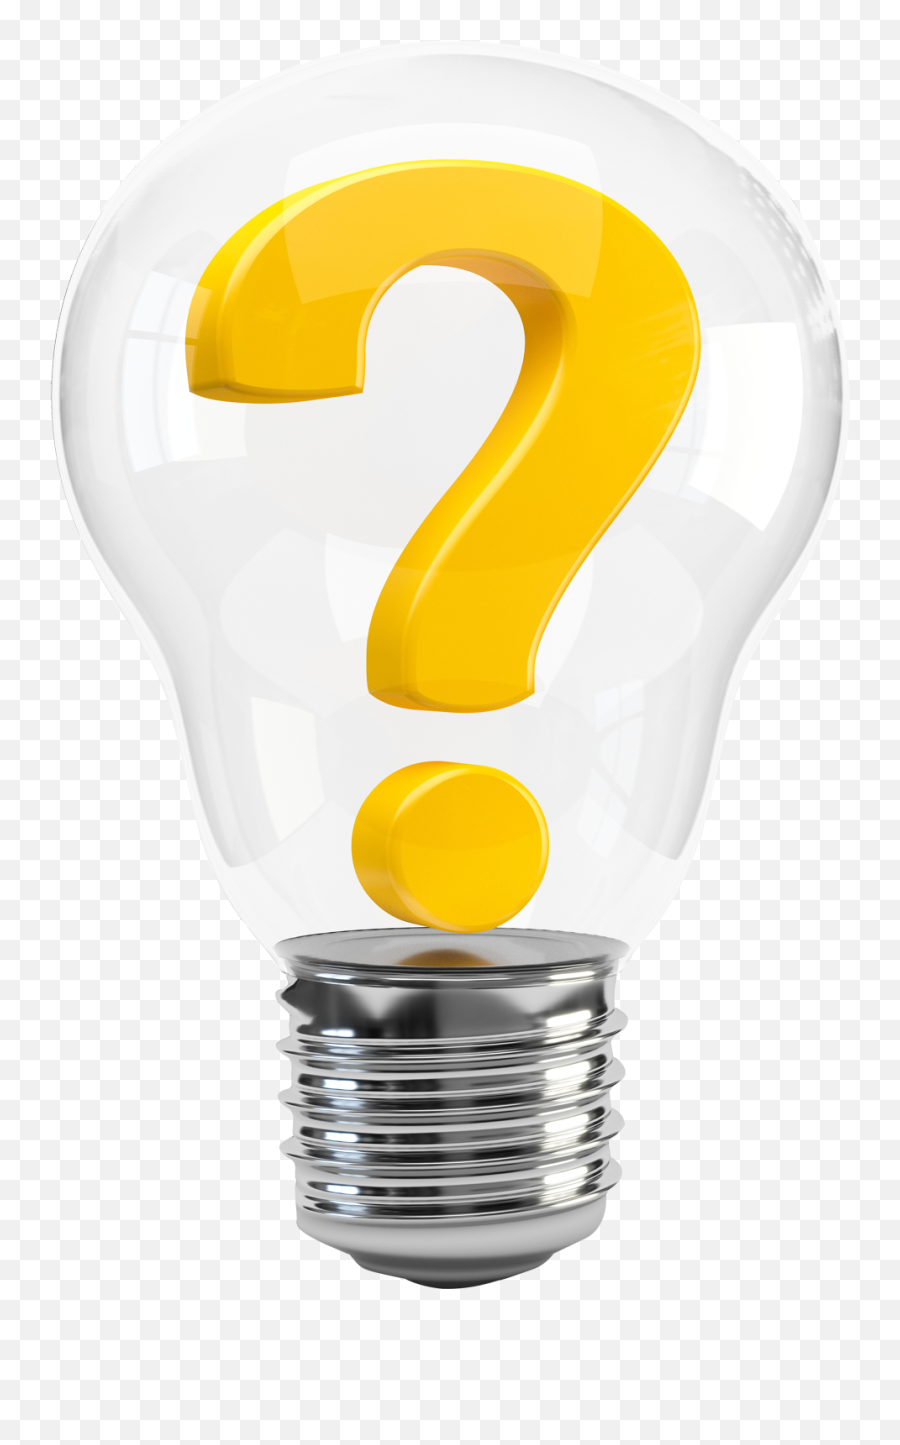 Idea Png Images - Pngpix Transparent Light Bulb With Question Mark Png,Light Bulb Idea Png